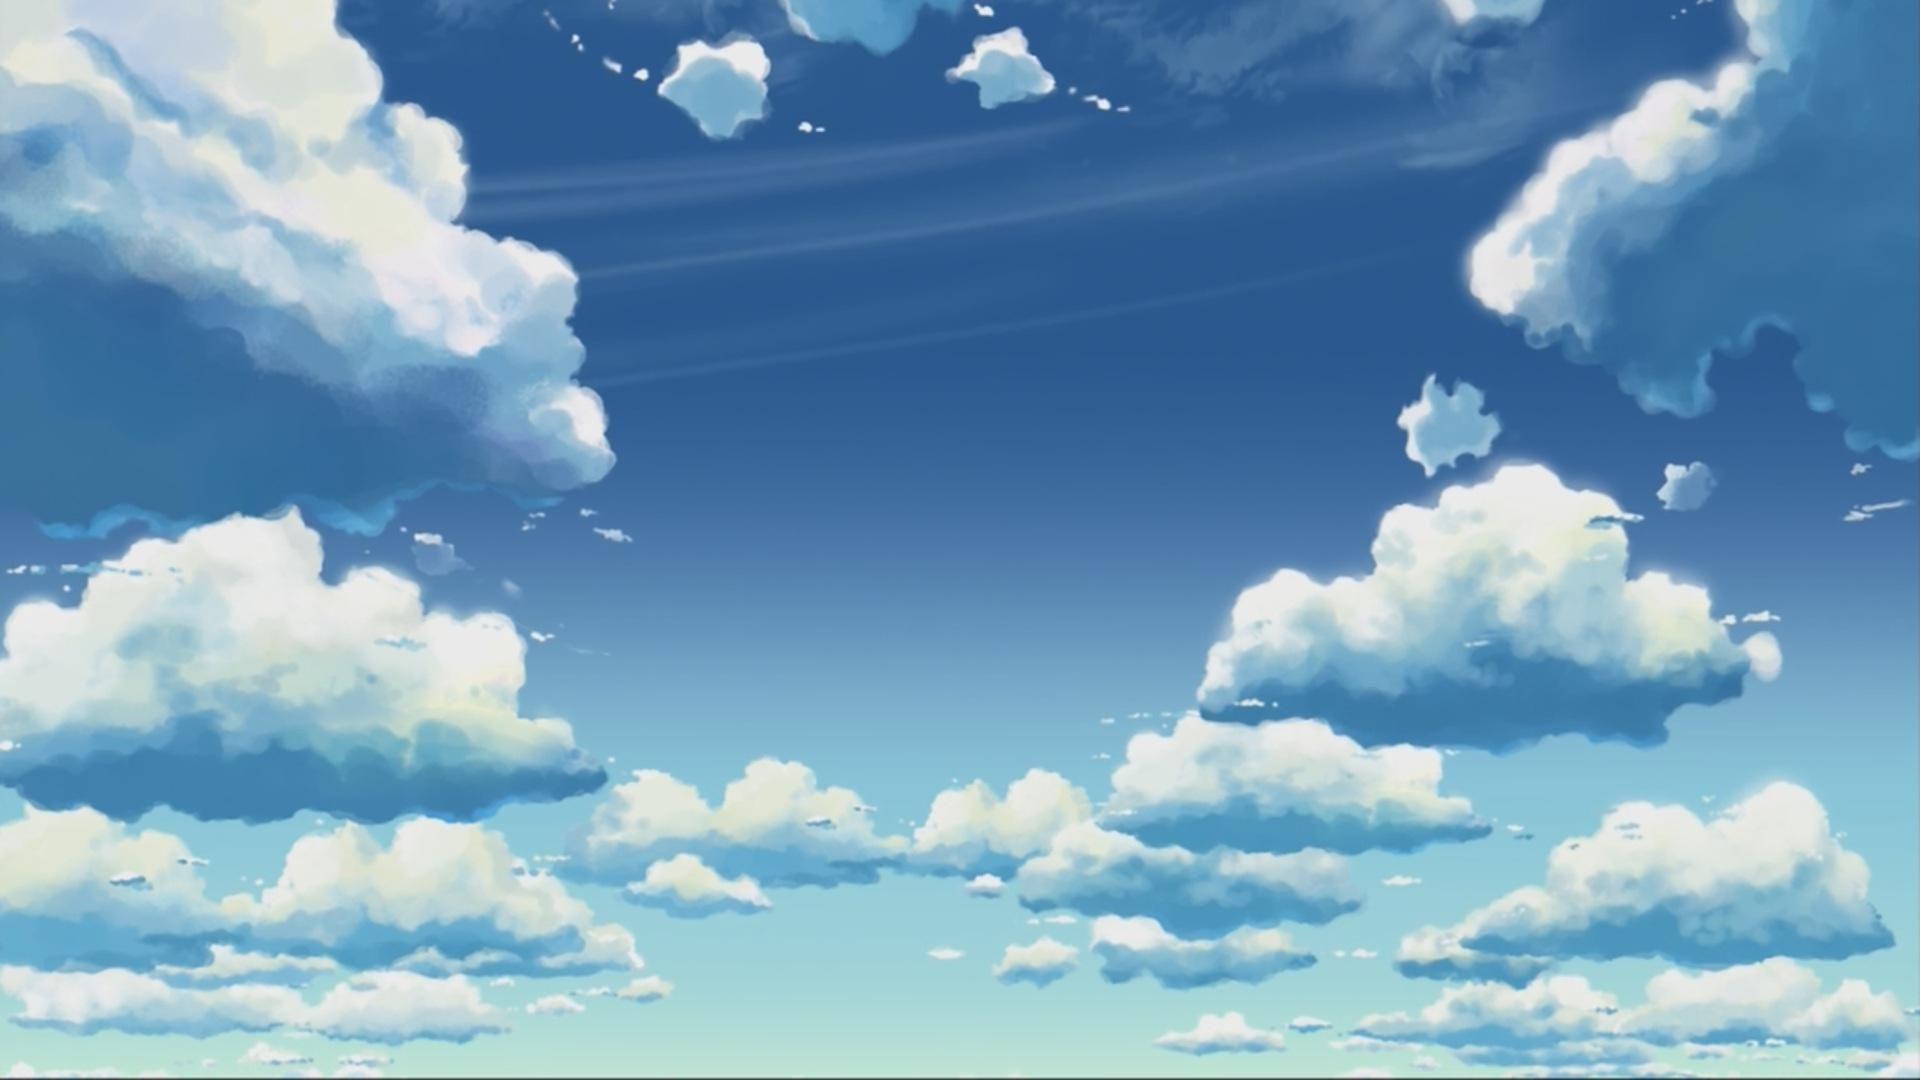 1920x1080 Blue Sky With Clouds hình nền